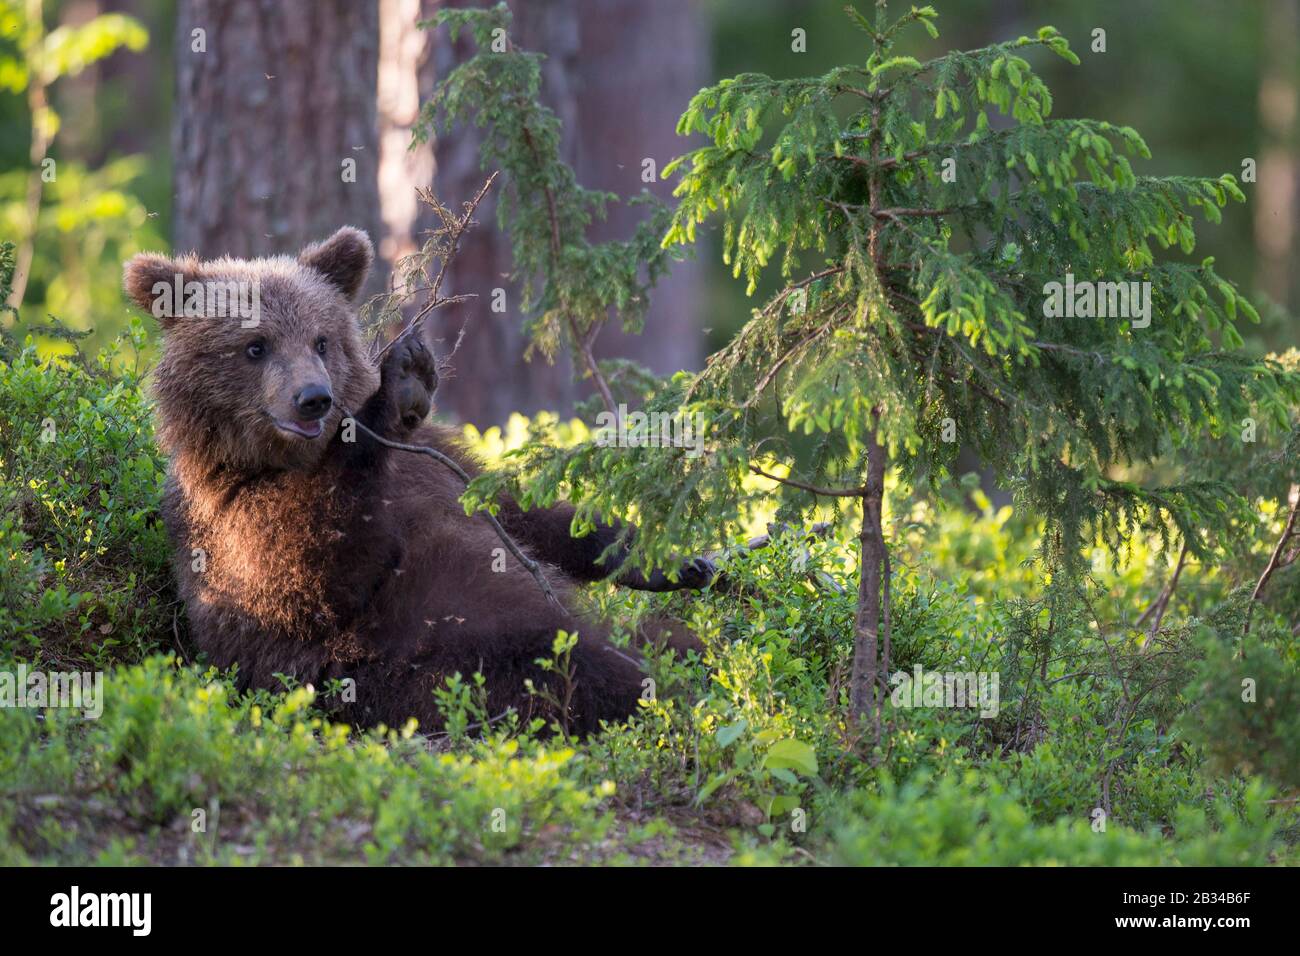 European brown bear (Ursus arctos arctos), baer cub playing with young spruce, Finland, Karelia, Suomussalmi Stock Photo